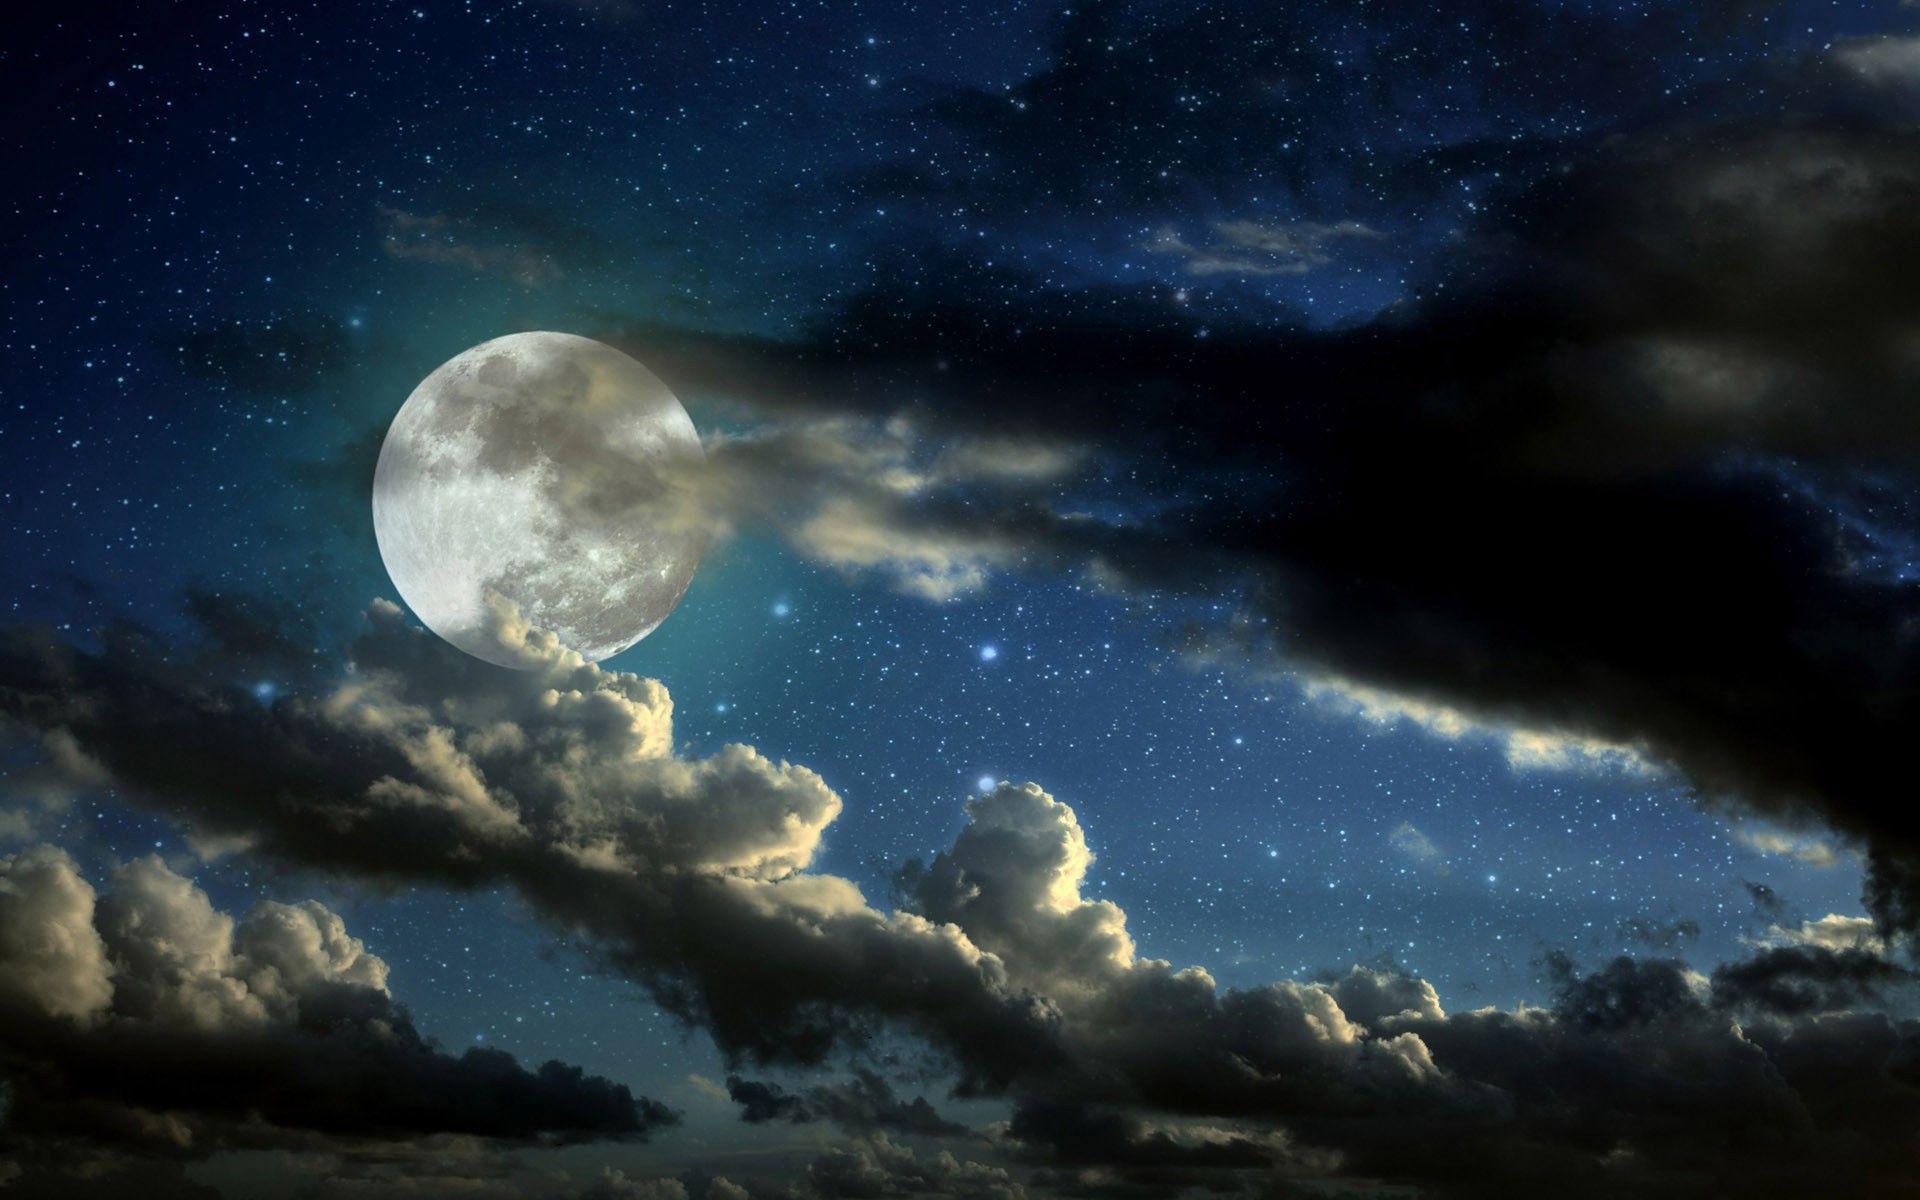 Moon Night Sky  Free photo on Pixabay  Pixabay